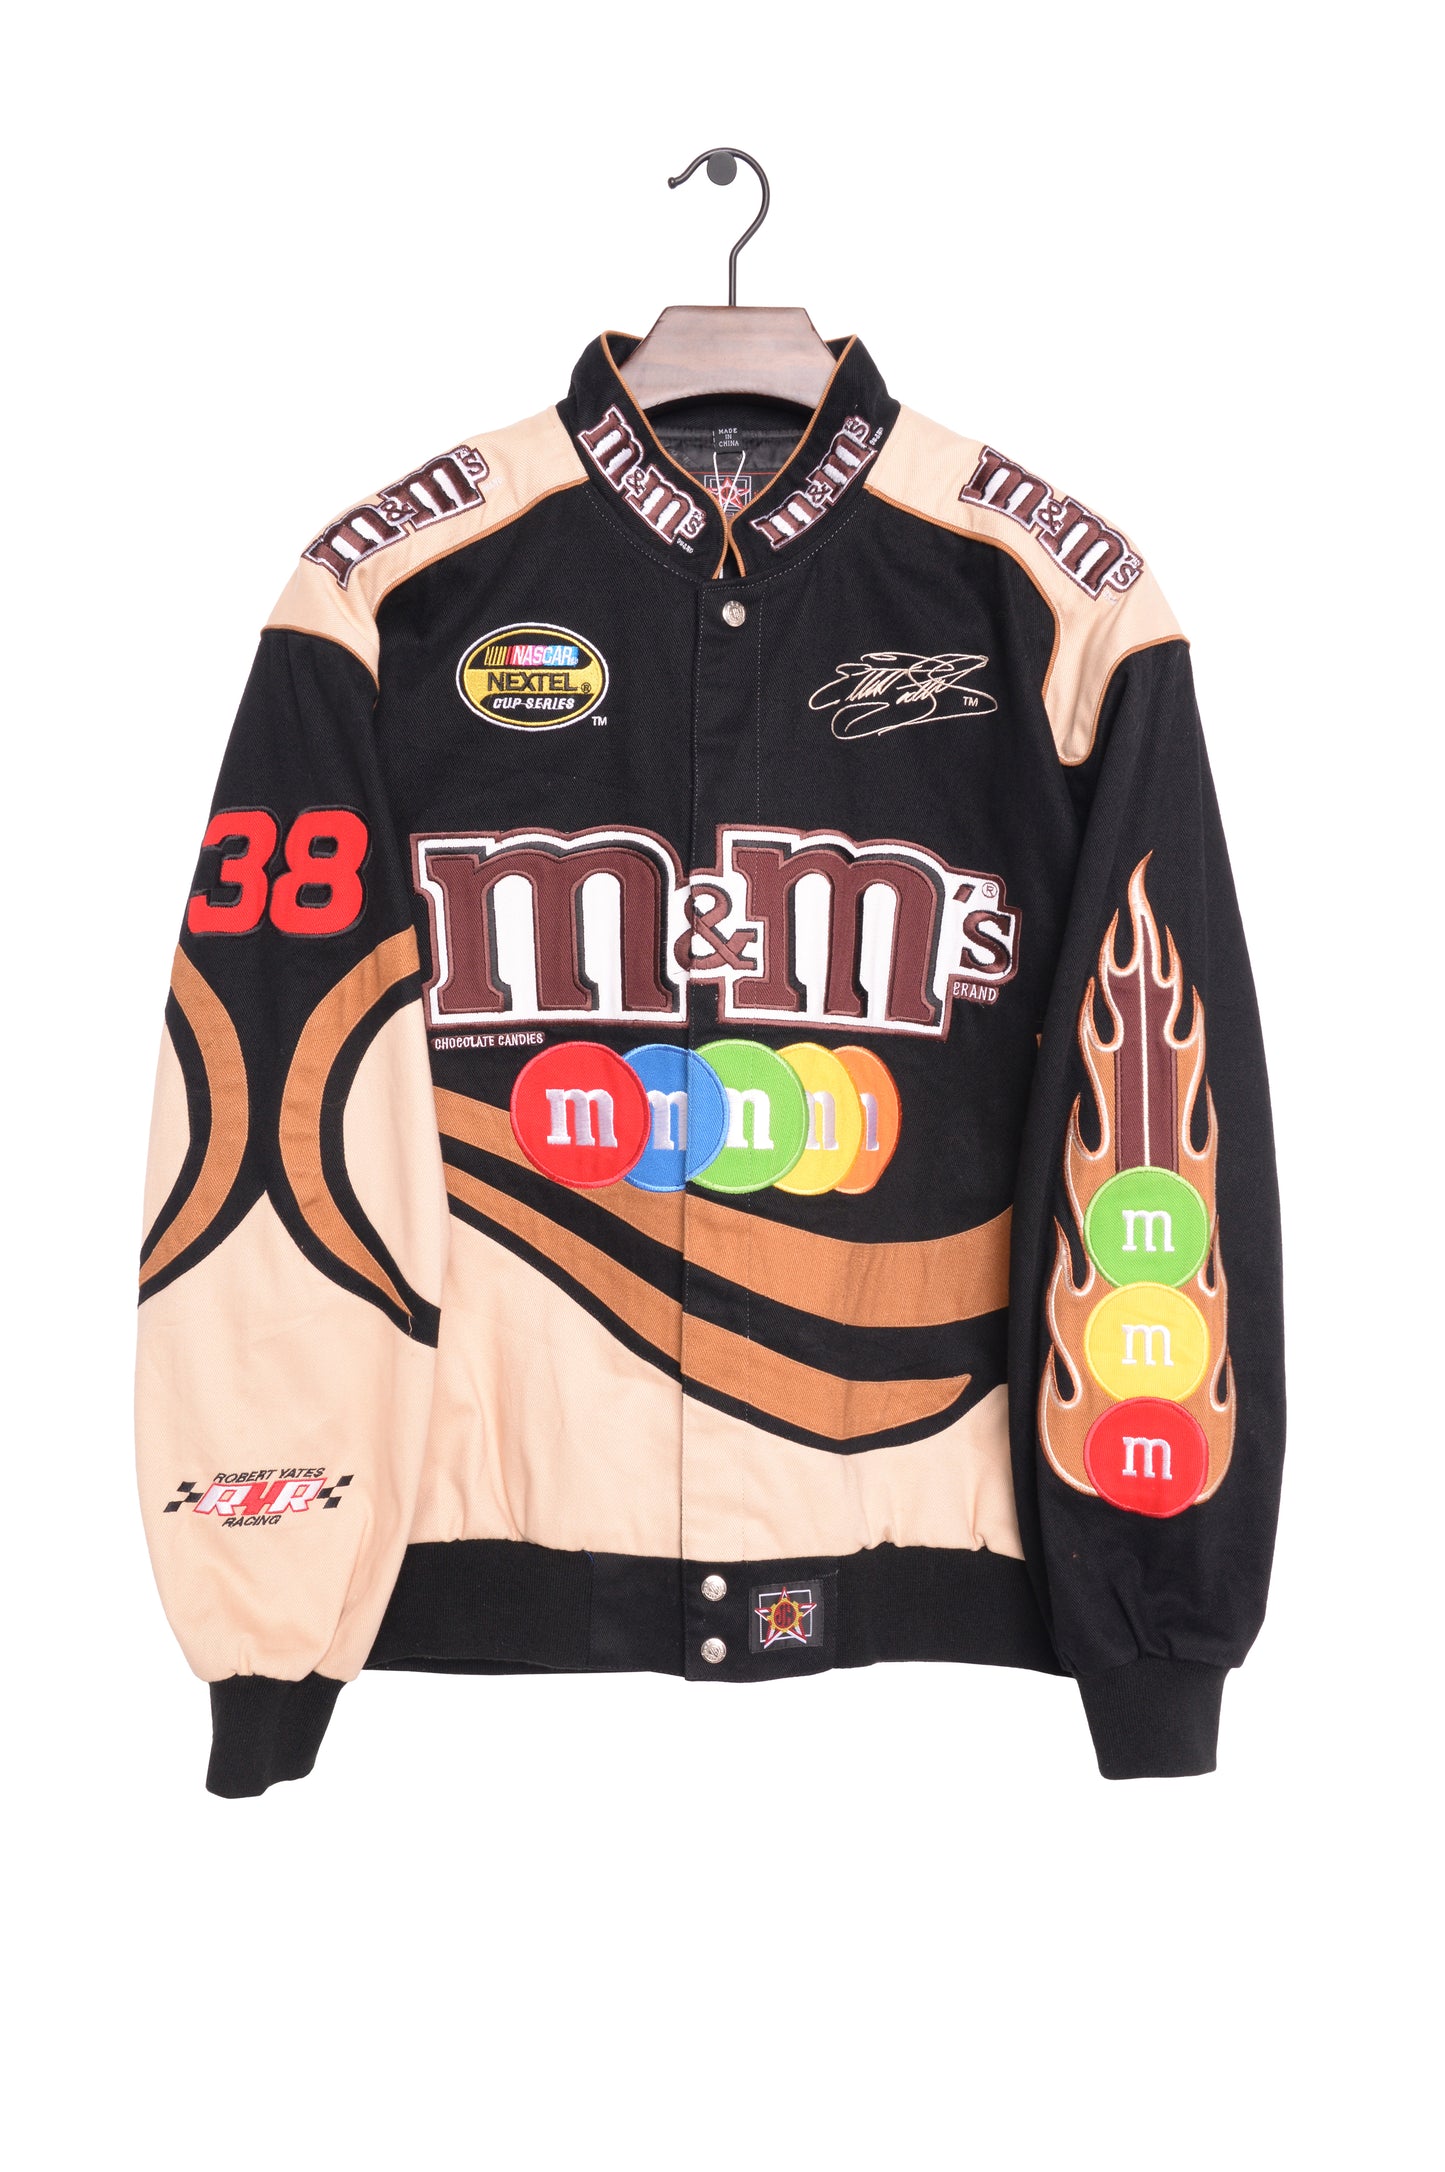 M&M NASCAR Racing Jacket